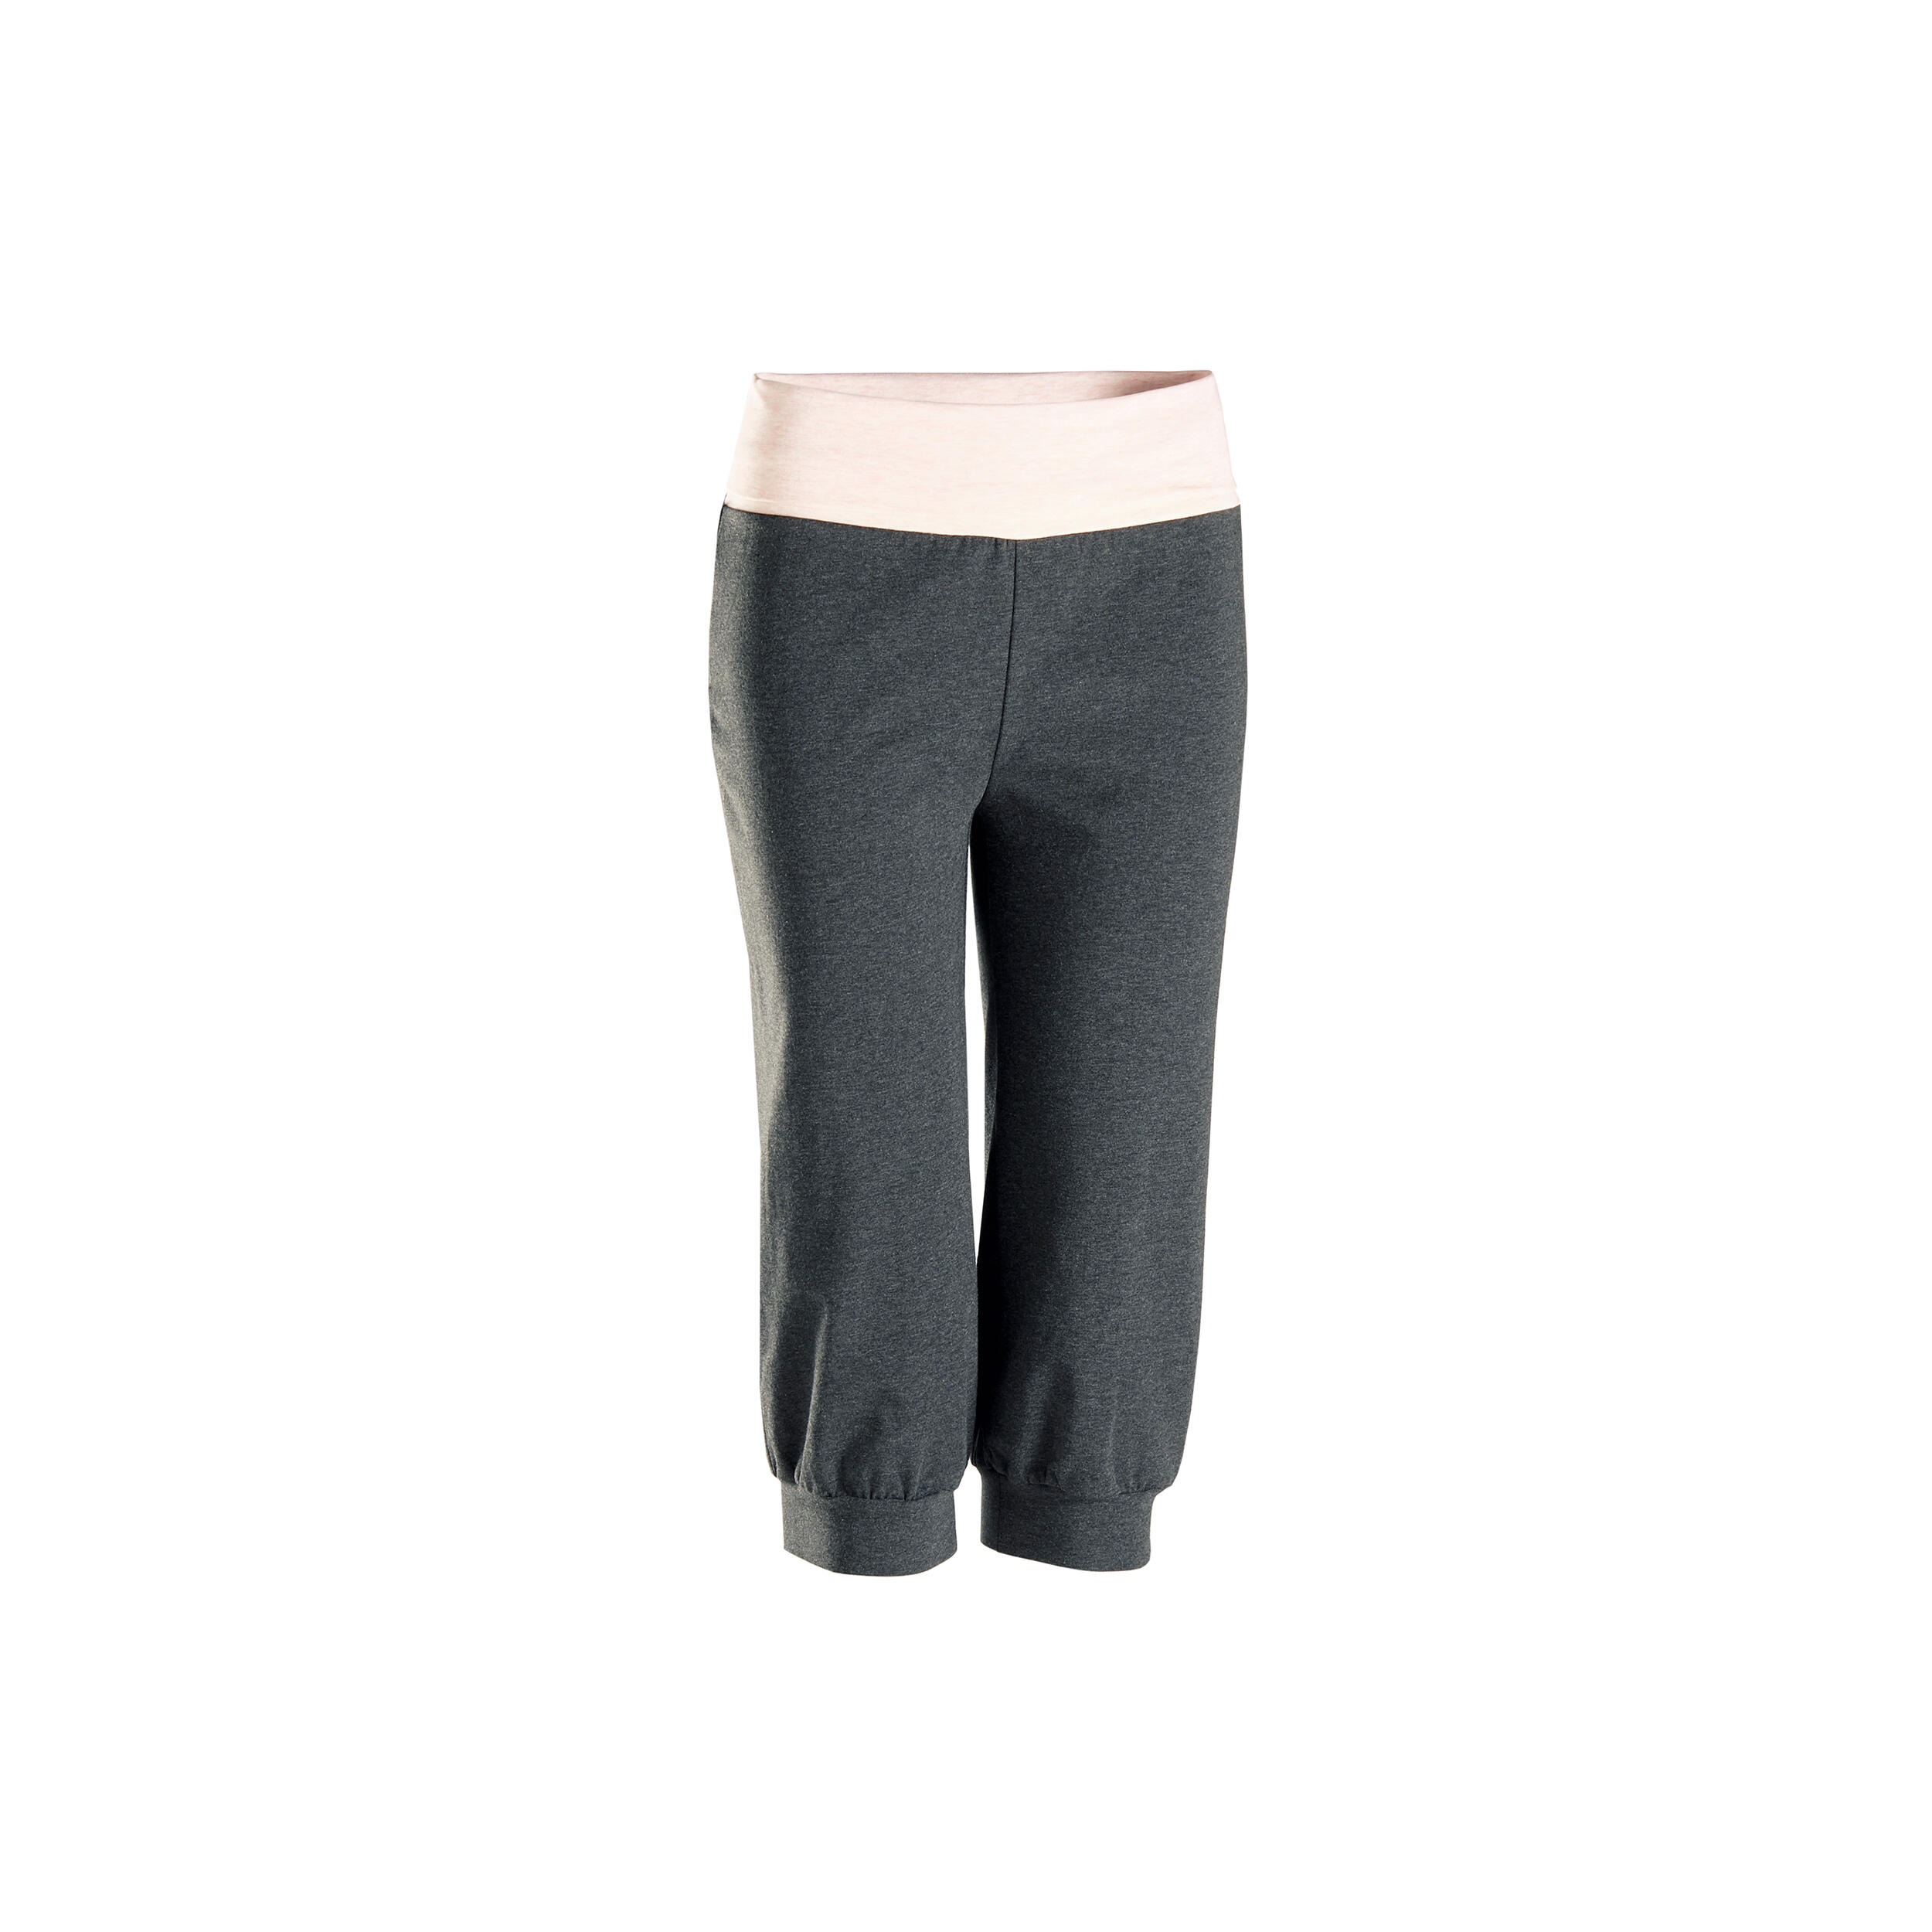 Women's Cotton Yoga Cropped Bottoms - Grey/Pink 2/8